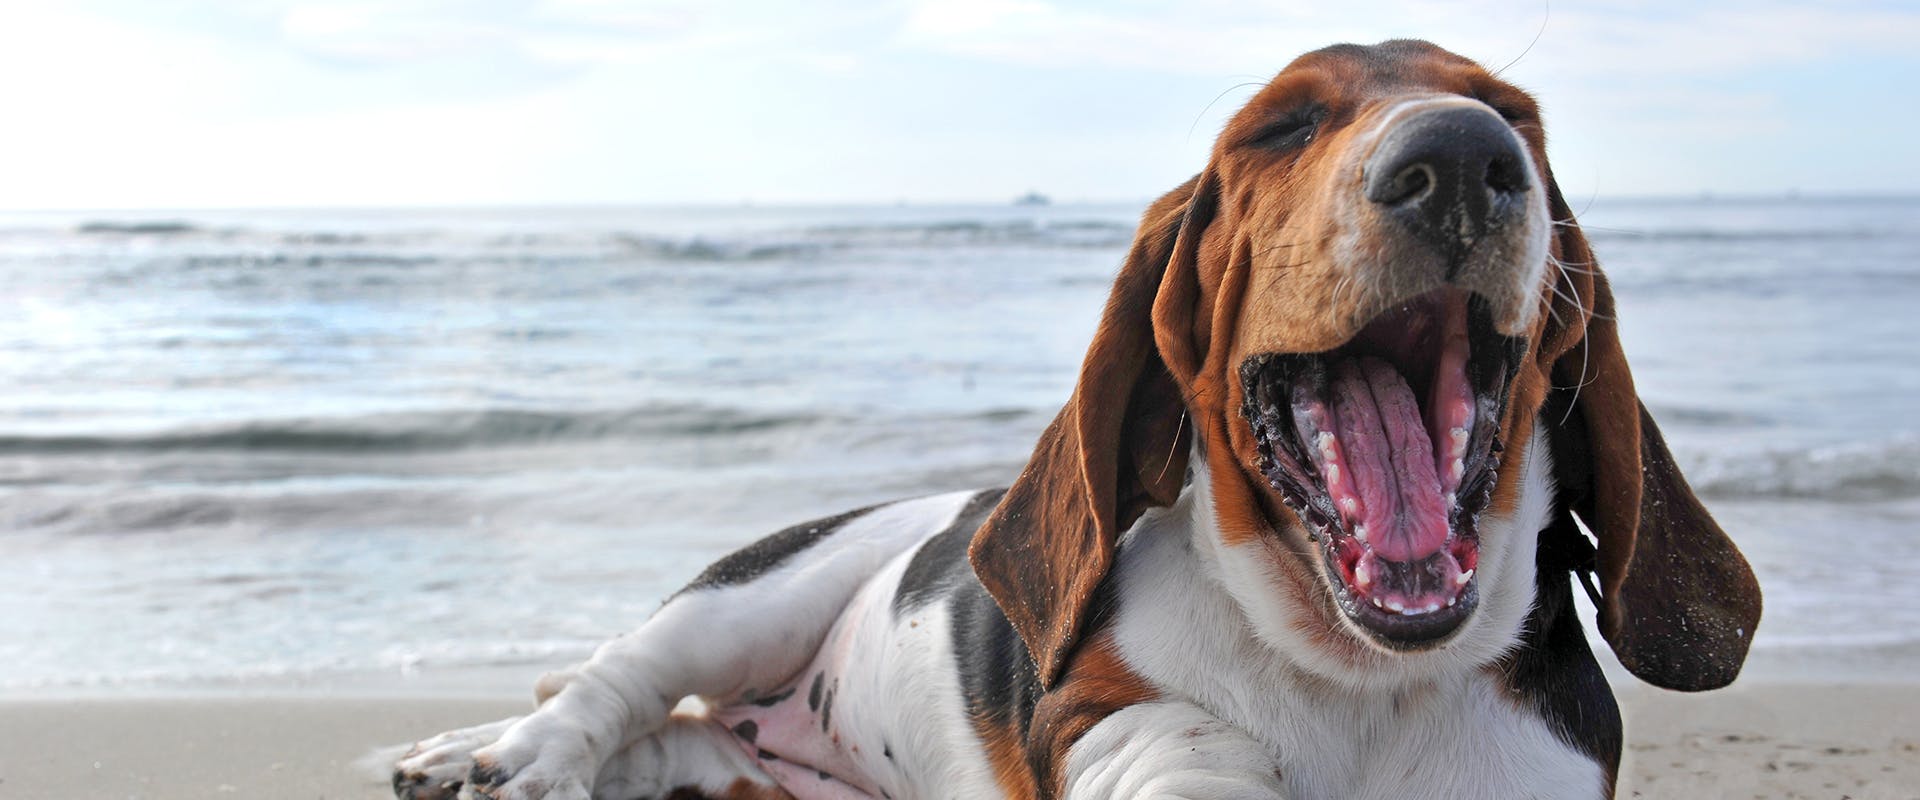 A Basset Hound yawning on the beach